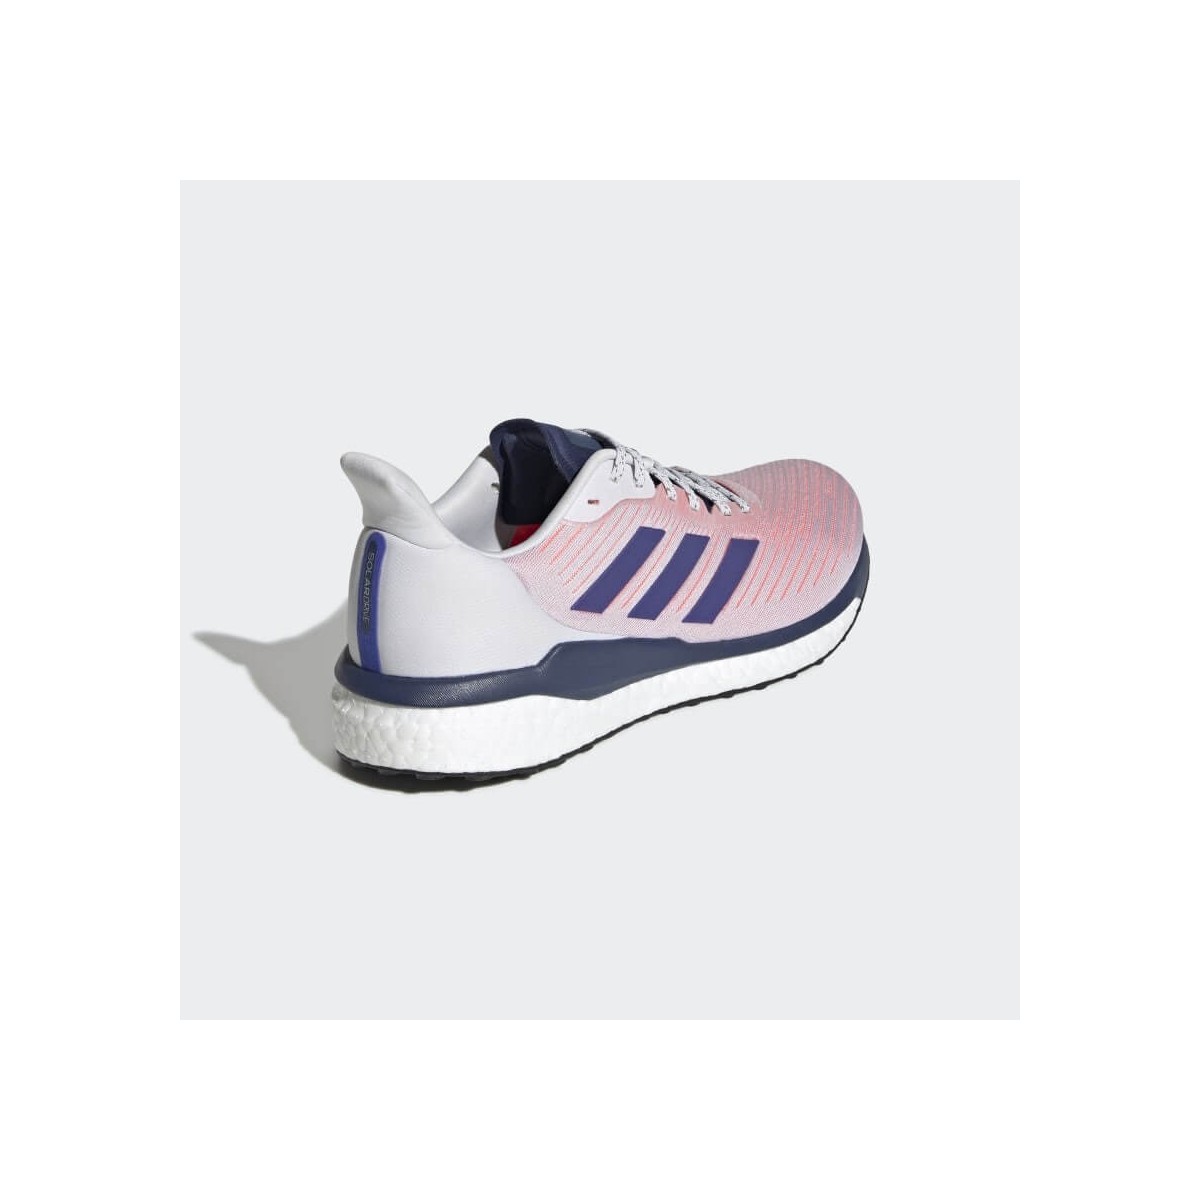 Examinar detenidamente Abolladura para agregar Adidas Solar Drive 19 Pink Blue PV20 Men's Shoes